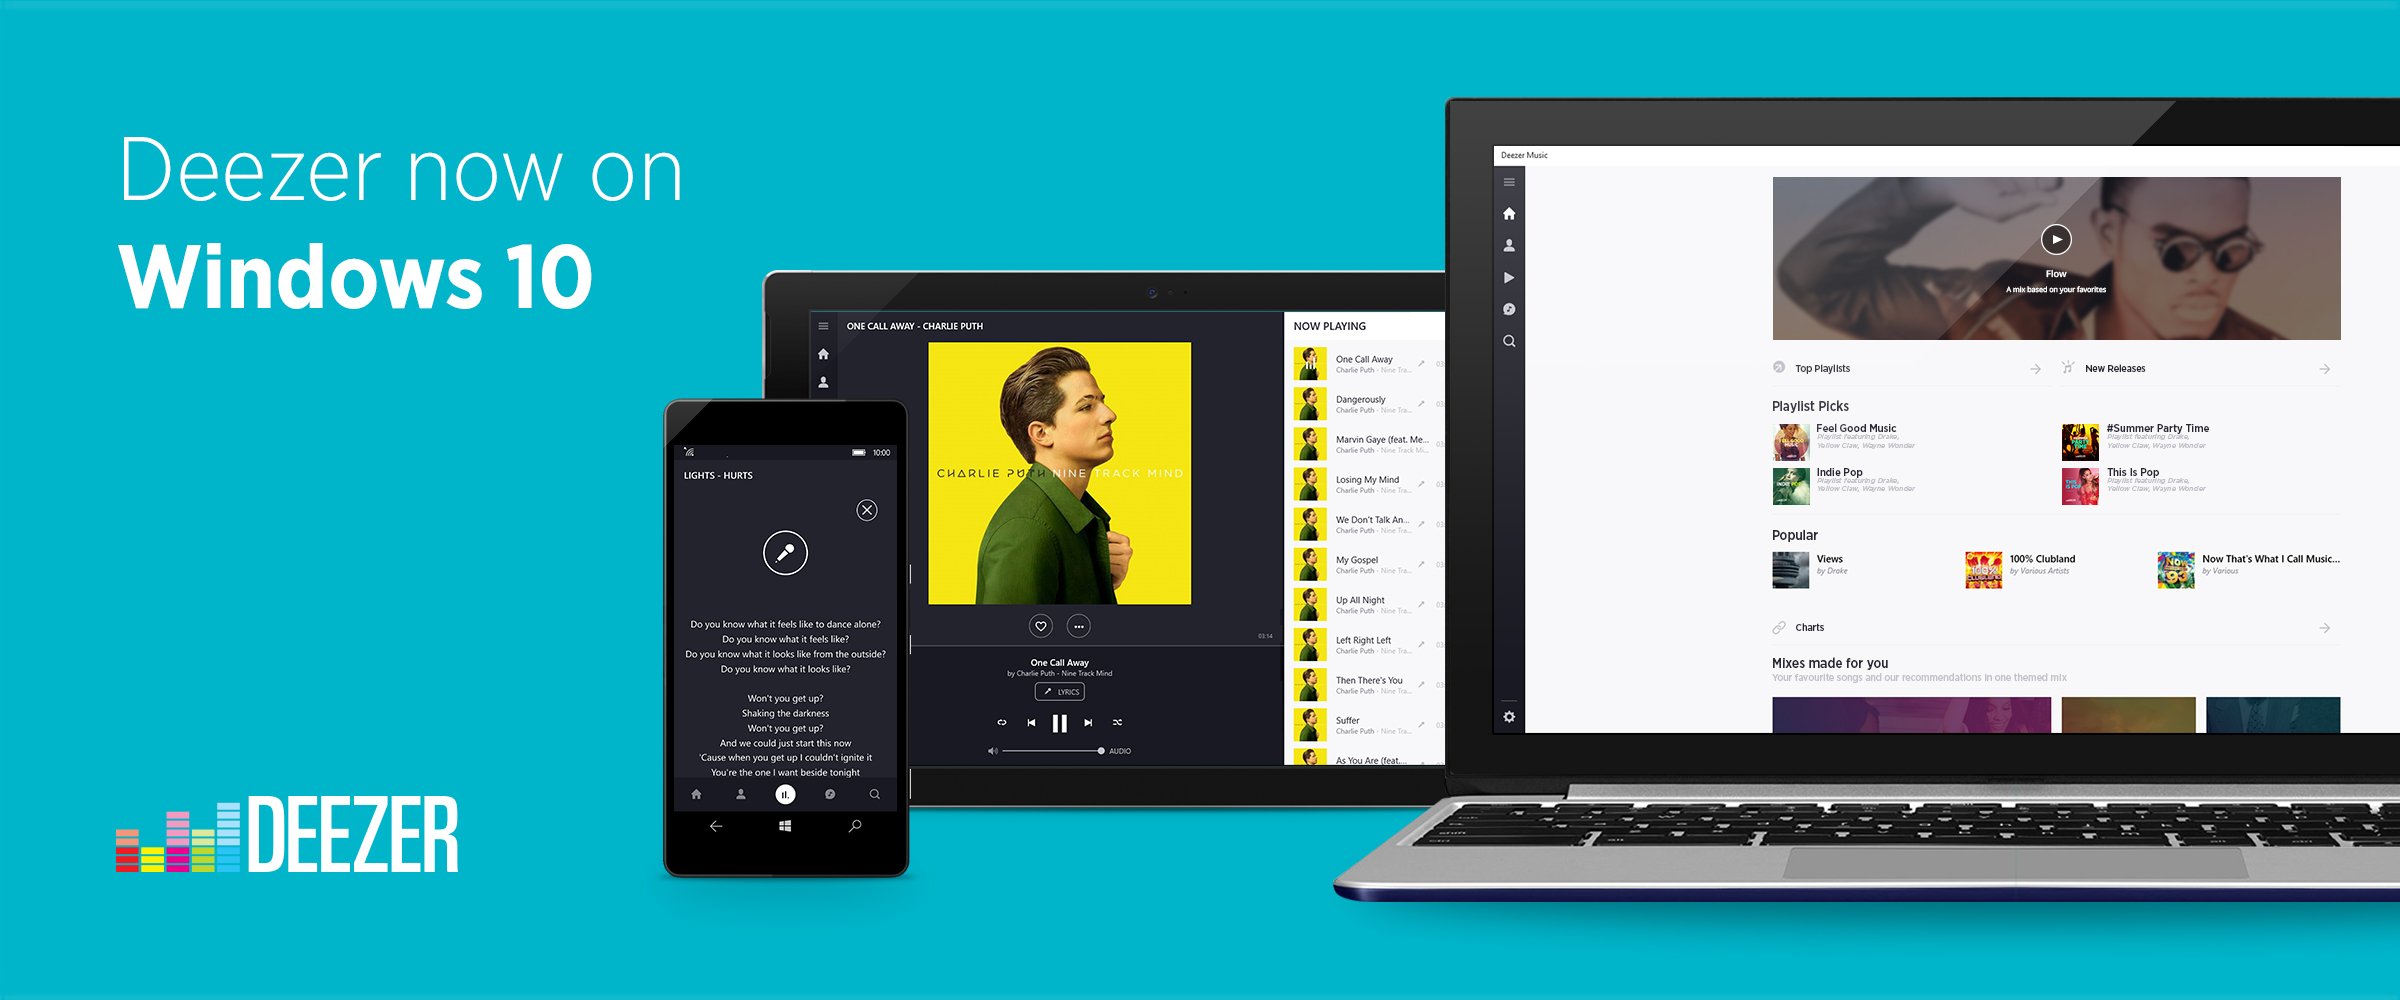 Deezer For Windows 10 Exits Preview With New Update Mspoweruser